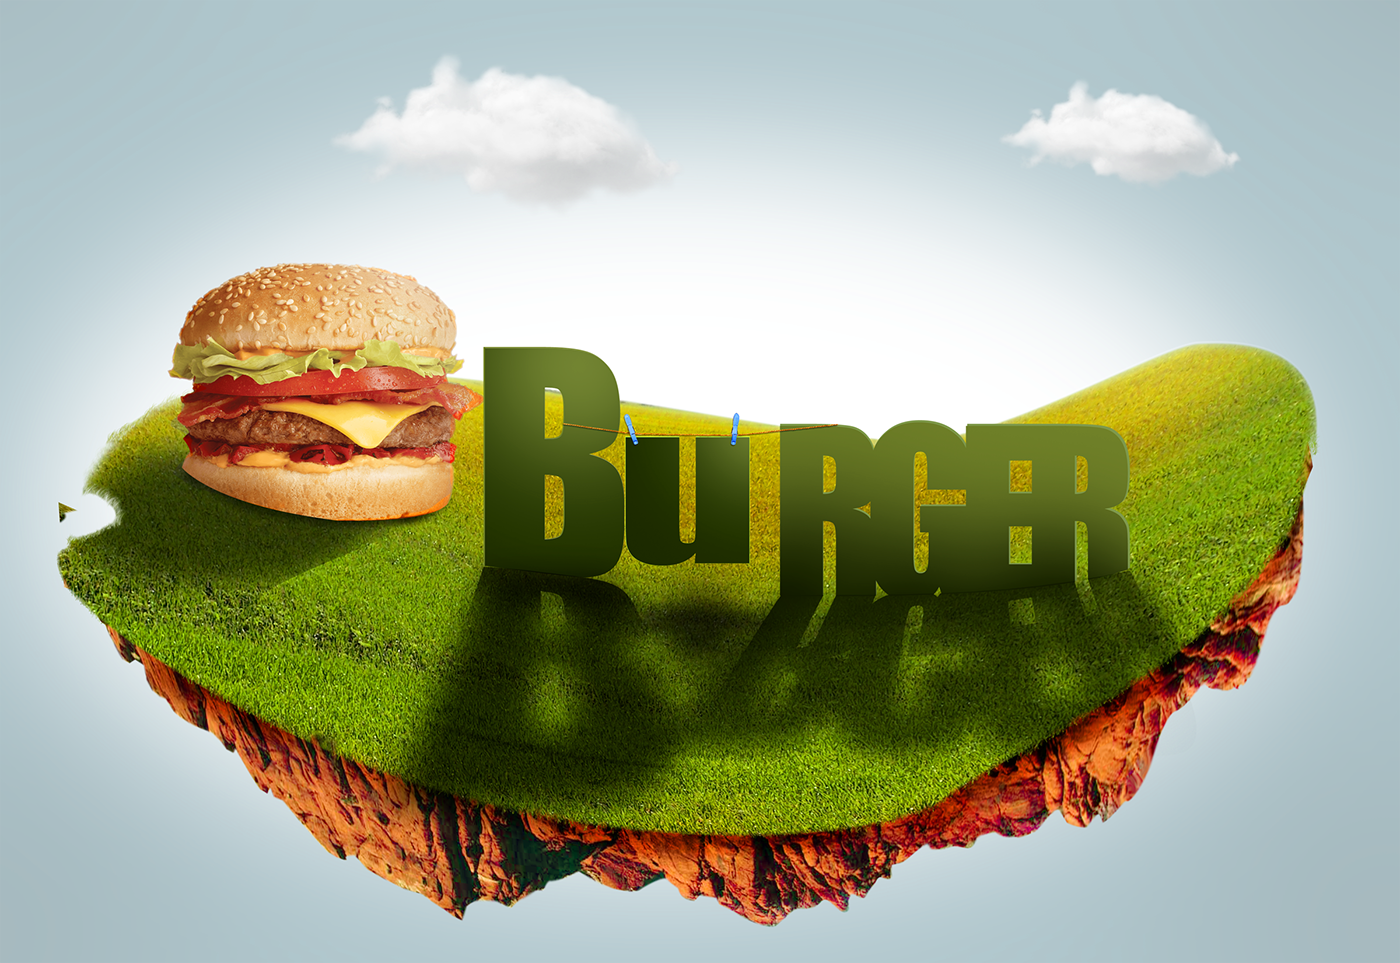 burger manipulation attempt